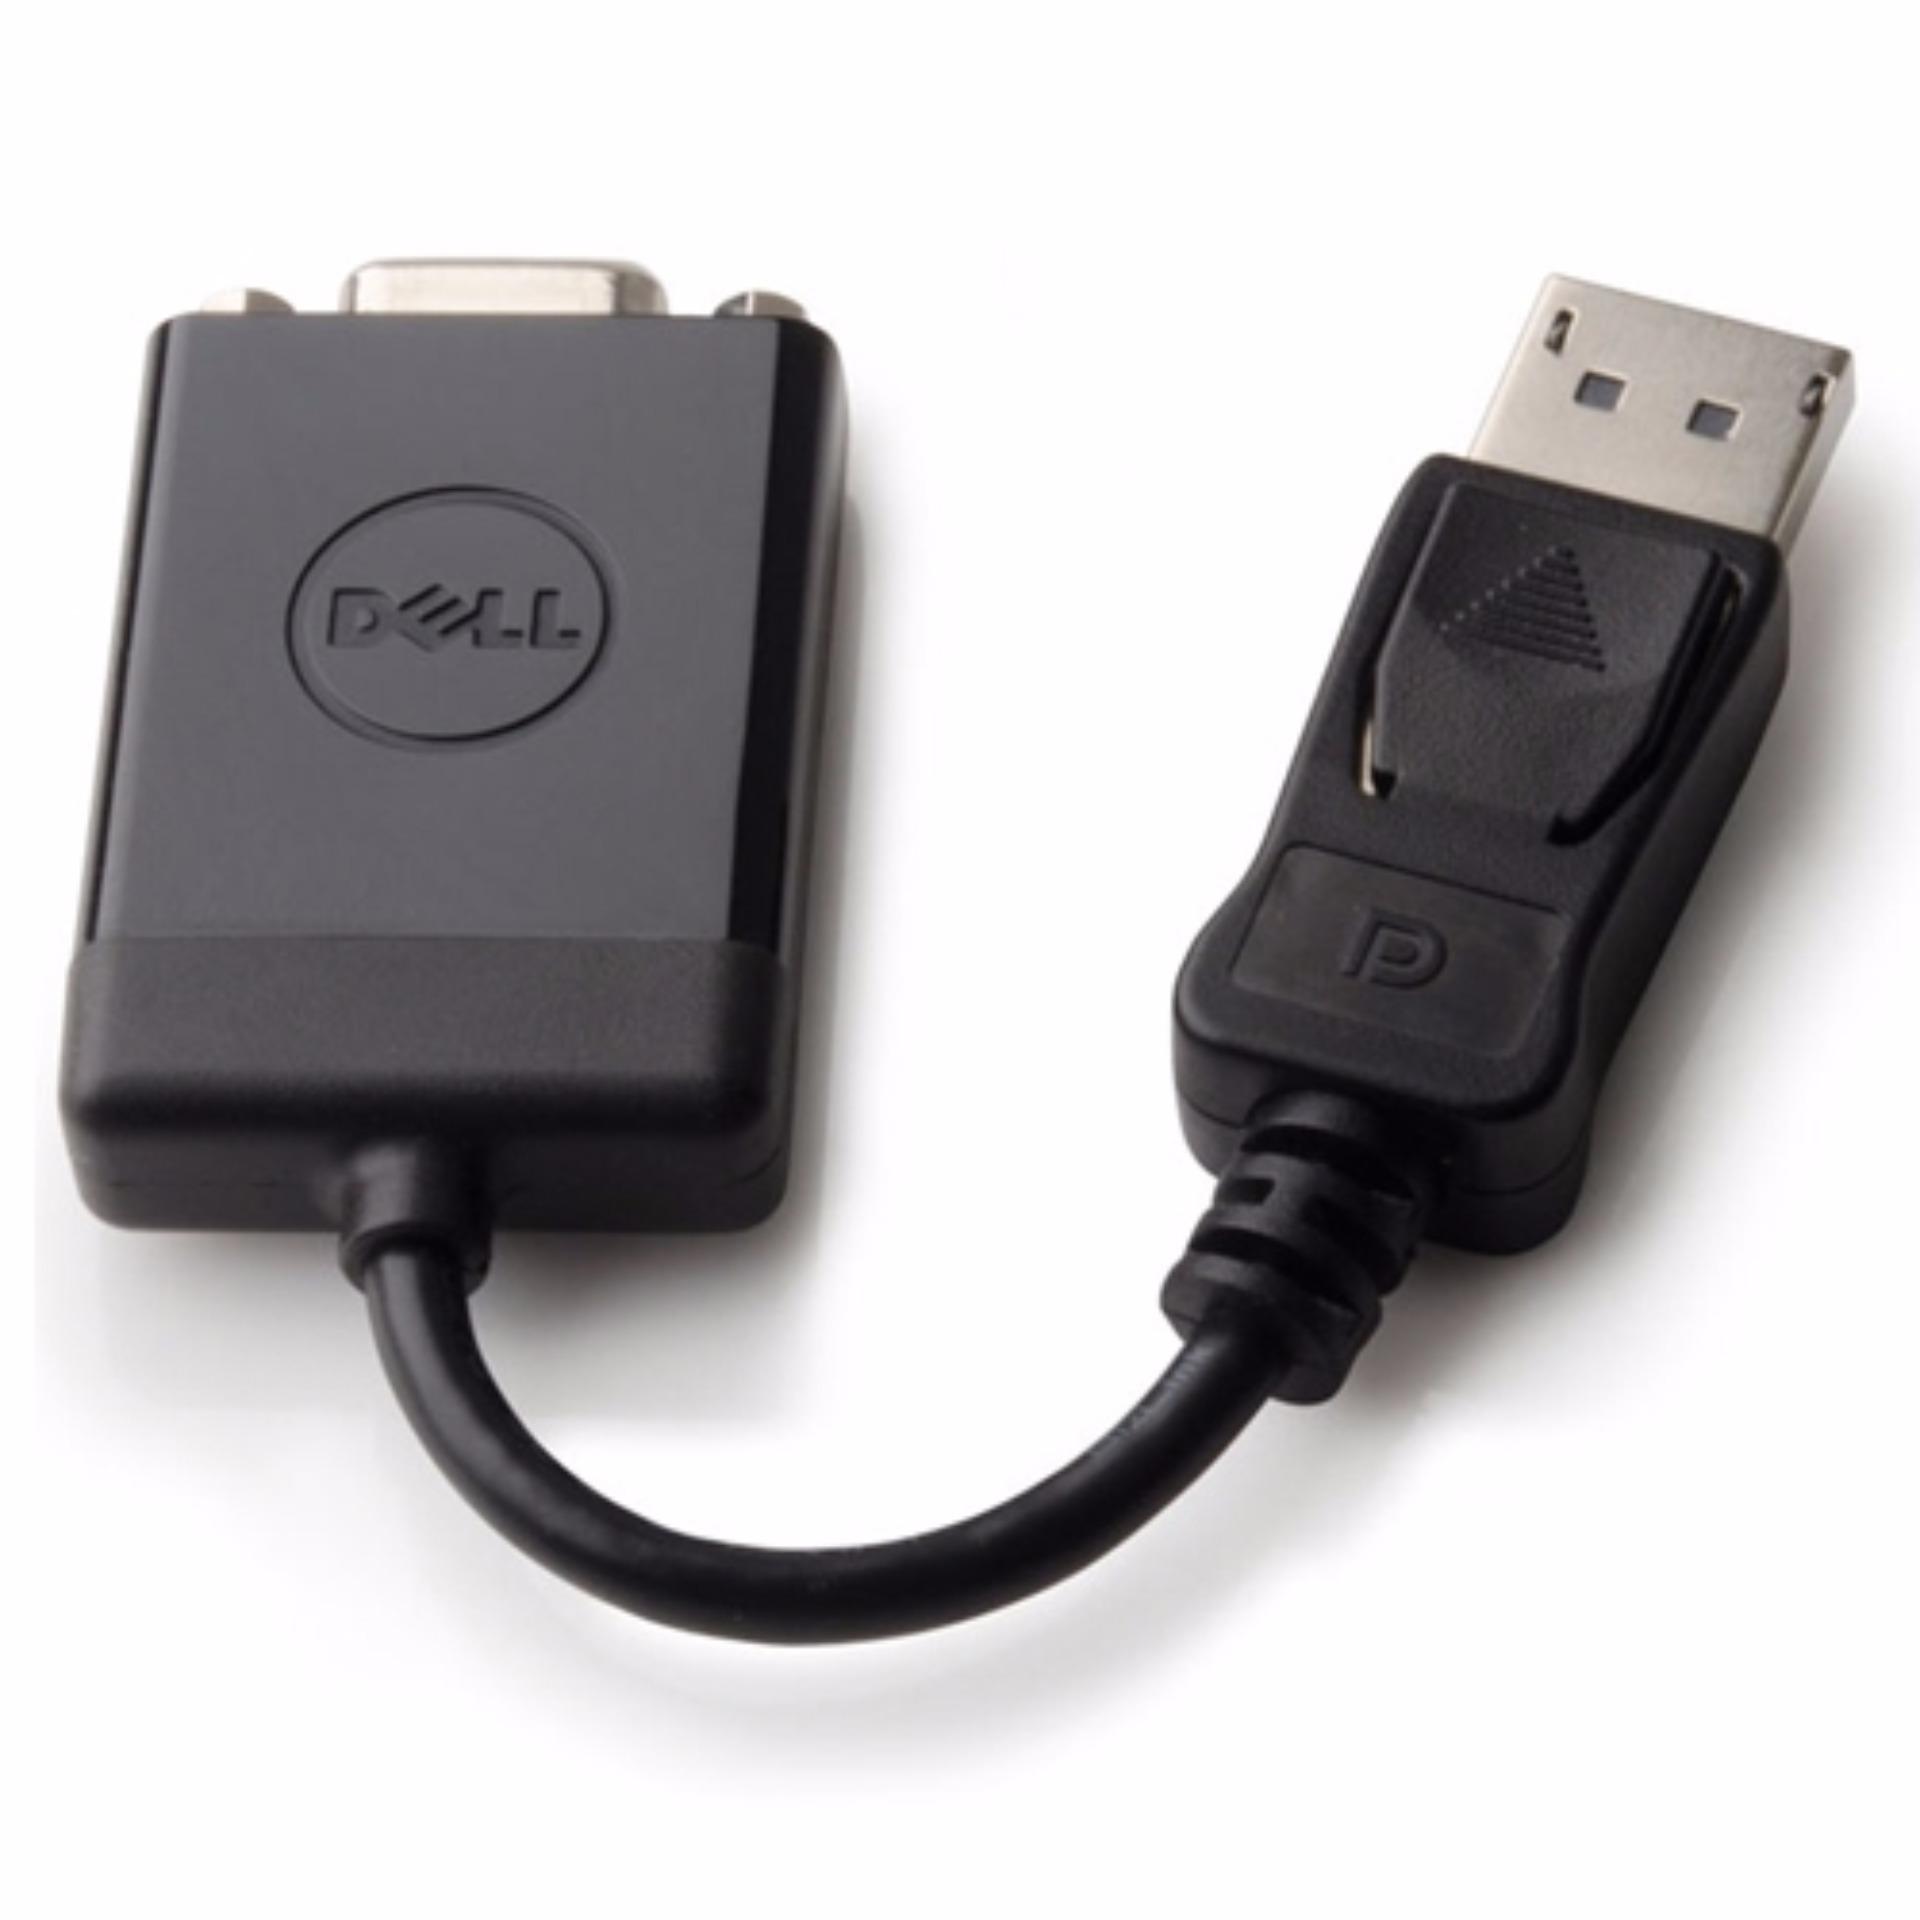 Dell Cable Adapter DisplayPort To VGA - DANBNBC084 5KMR3 0M9N09 0RN699